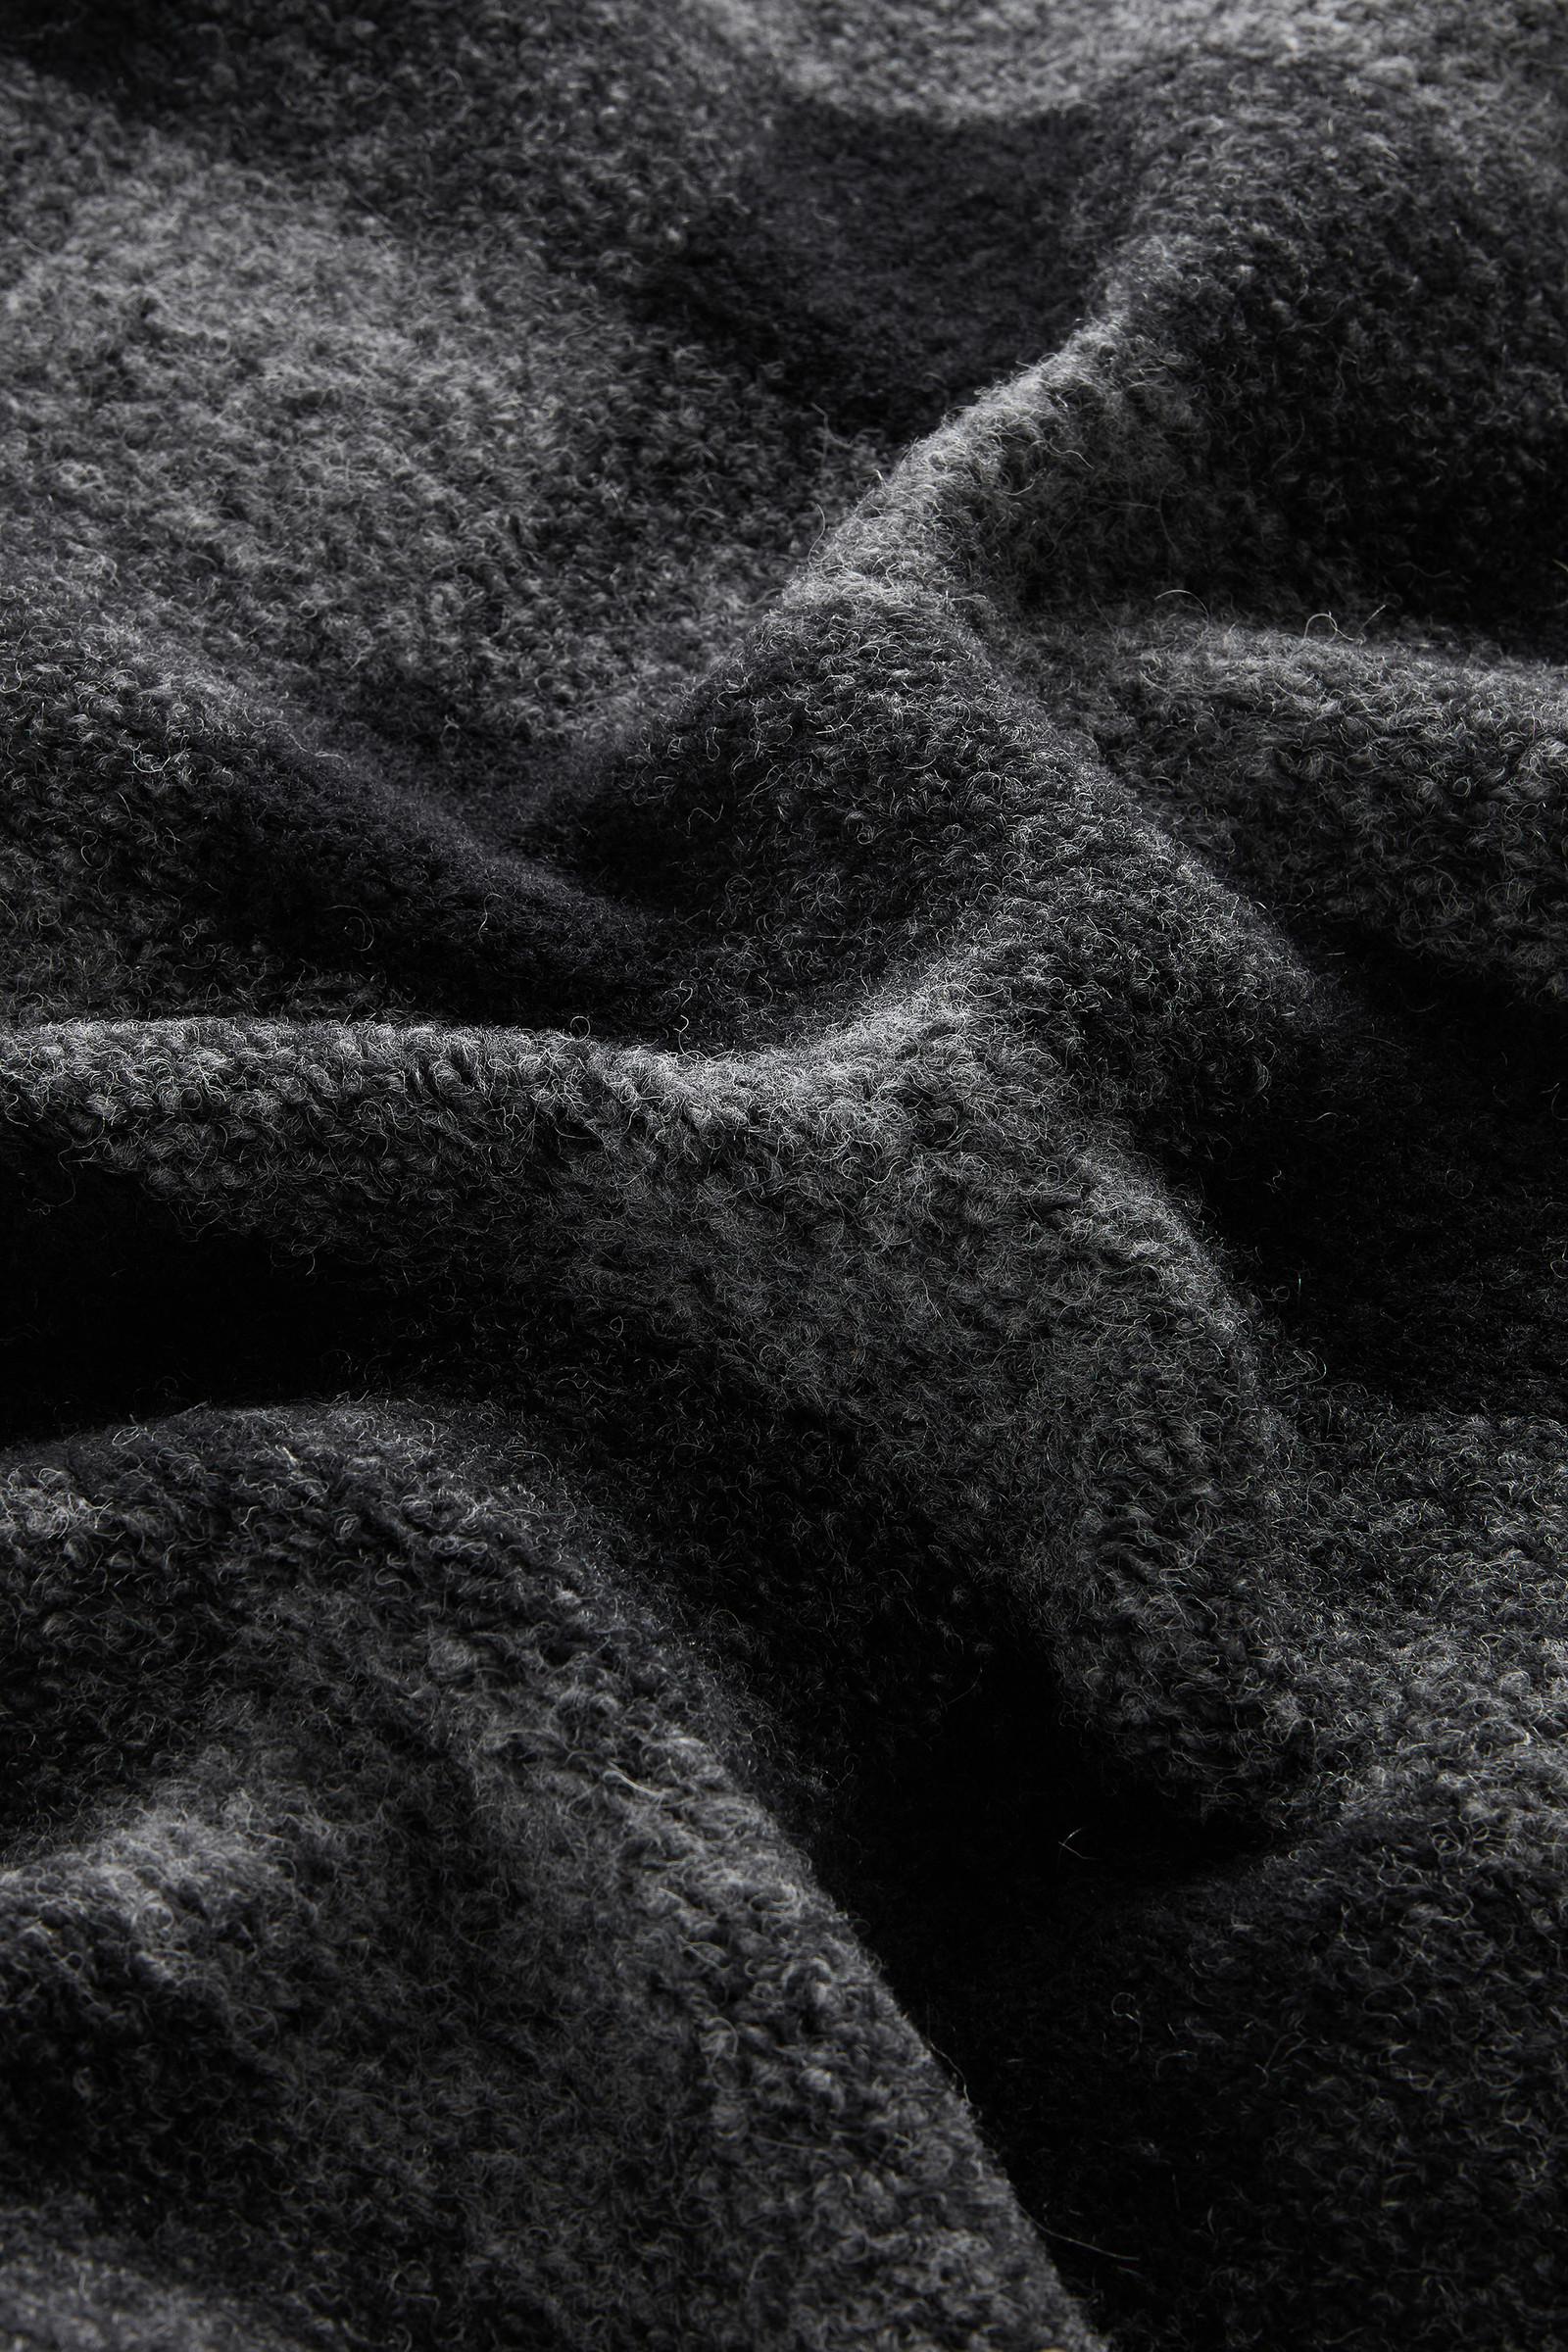 Women's Gentry Coat in Wool Blend with Hood Black | Woolrich USA